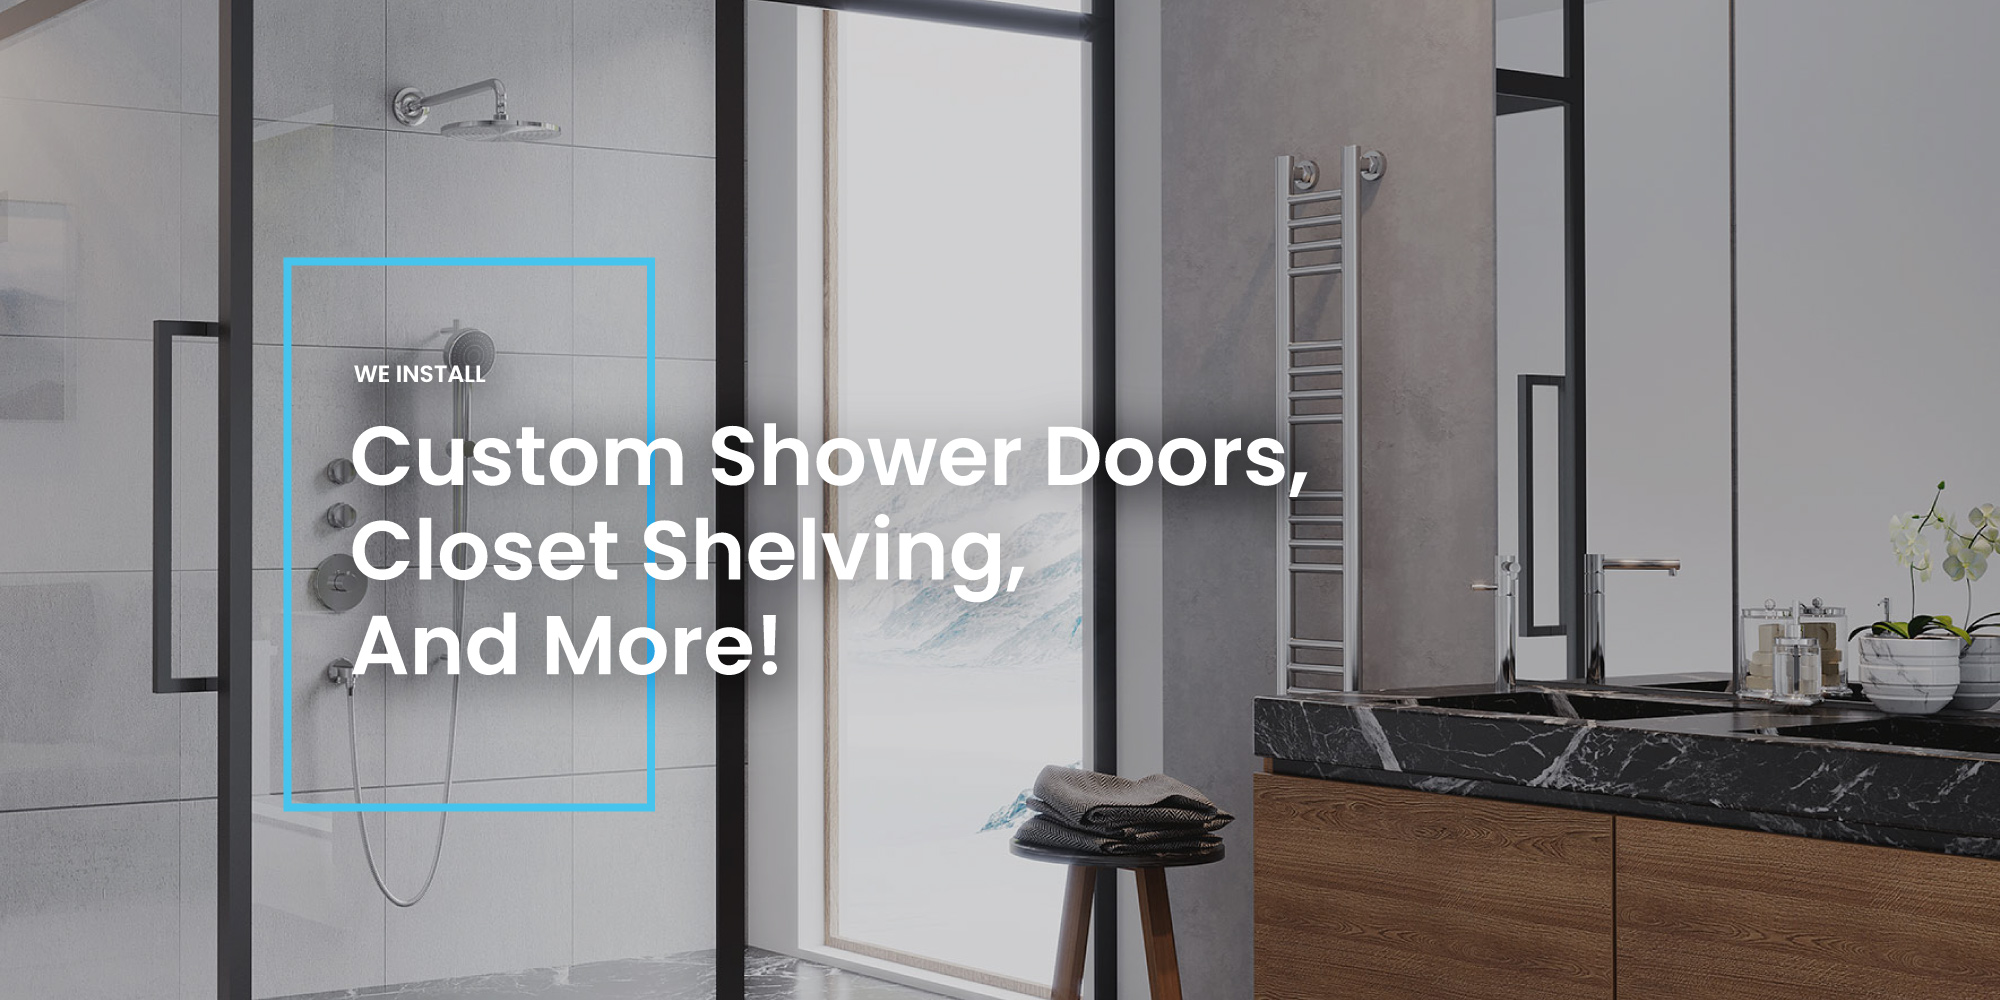 We install custom shower doors, closet shelving, and more!